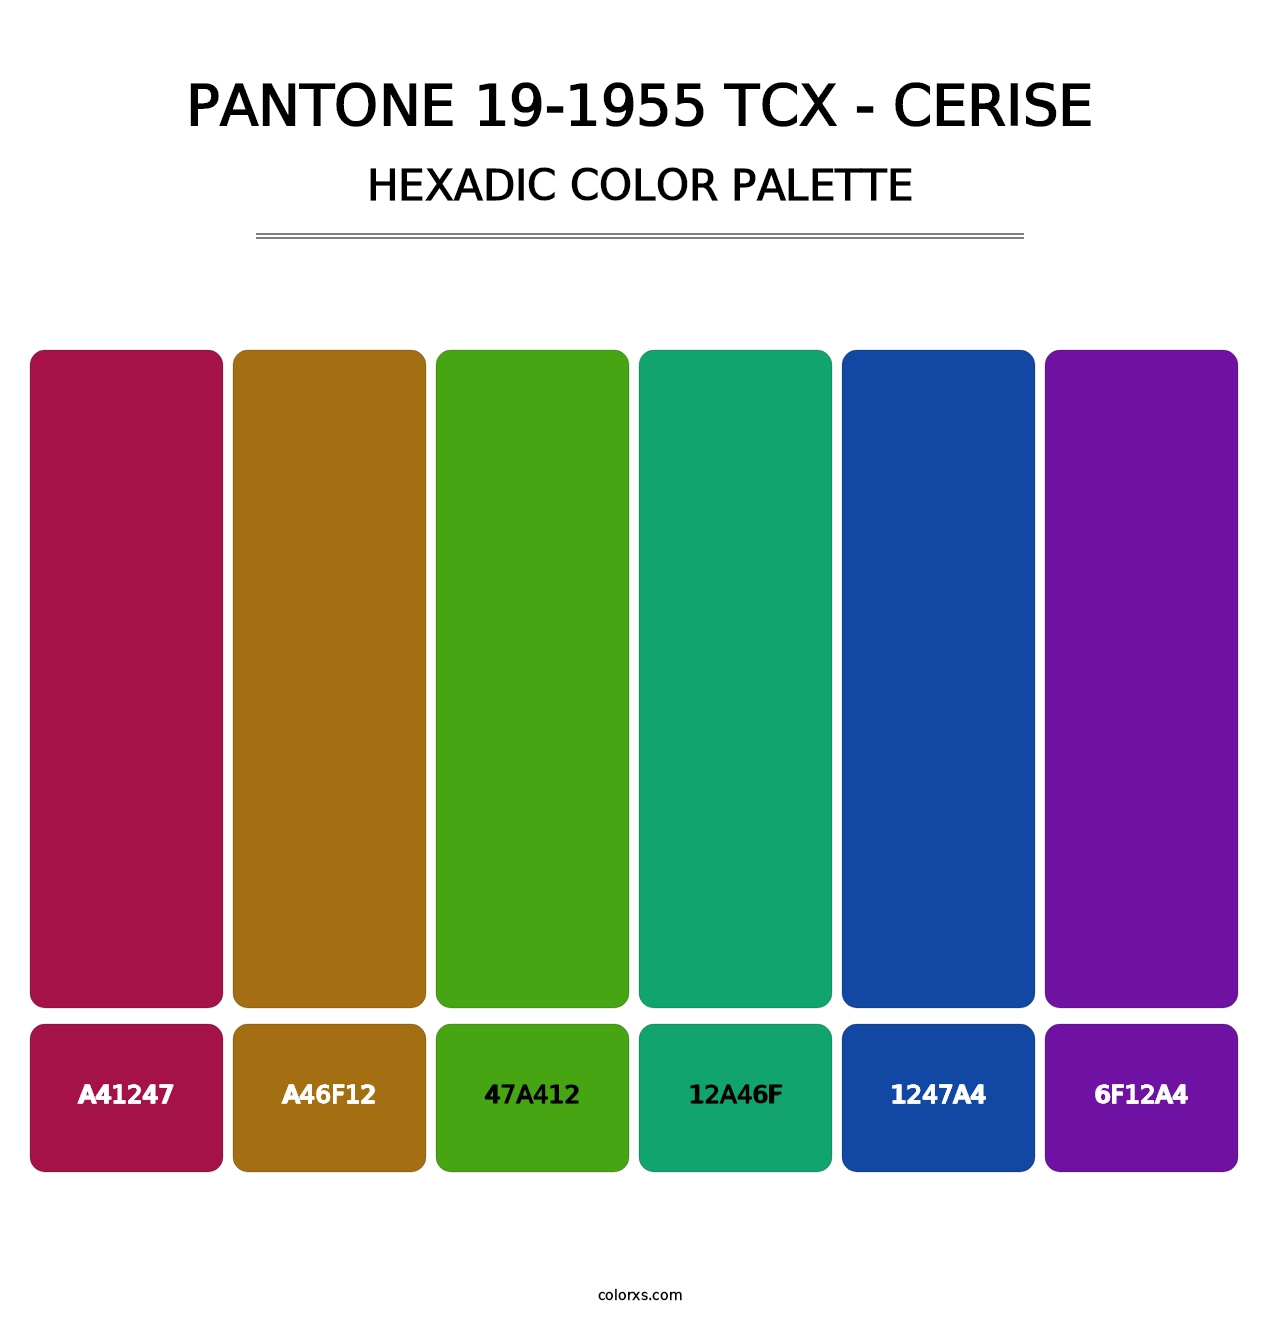 PANTONE 19-1955 TCX - Cerise - Hexadic Color Palette